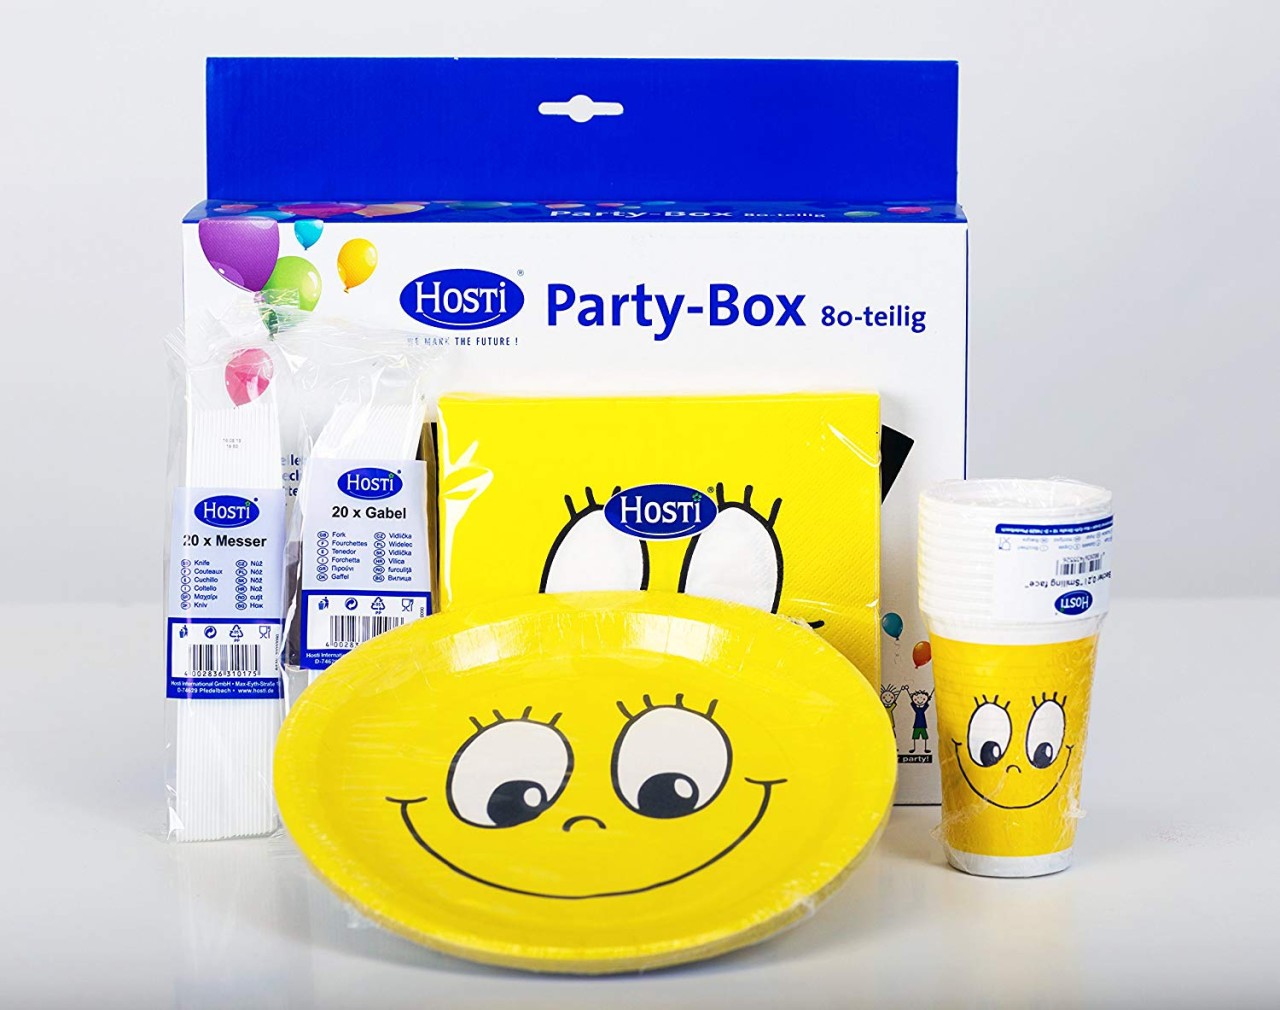 Partybox "Smile", 80-teilig